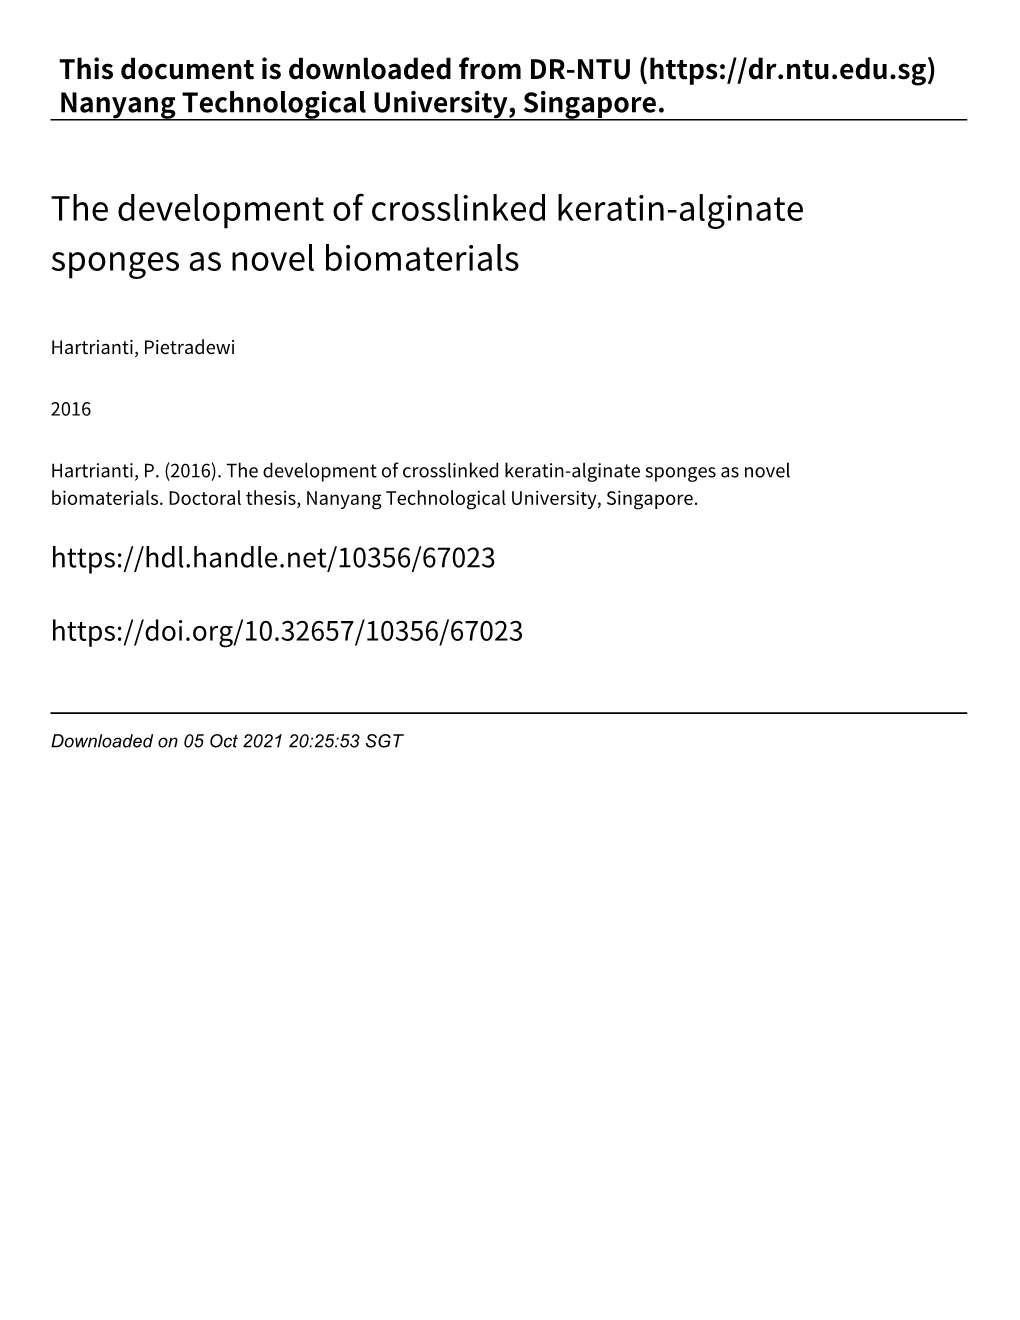 The Development of Crosslinked Keratin‑Alginate Sponges As Novel Biomaterials